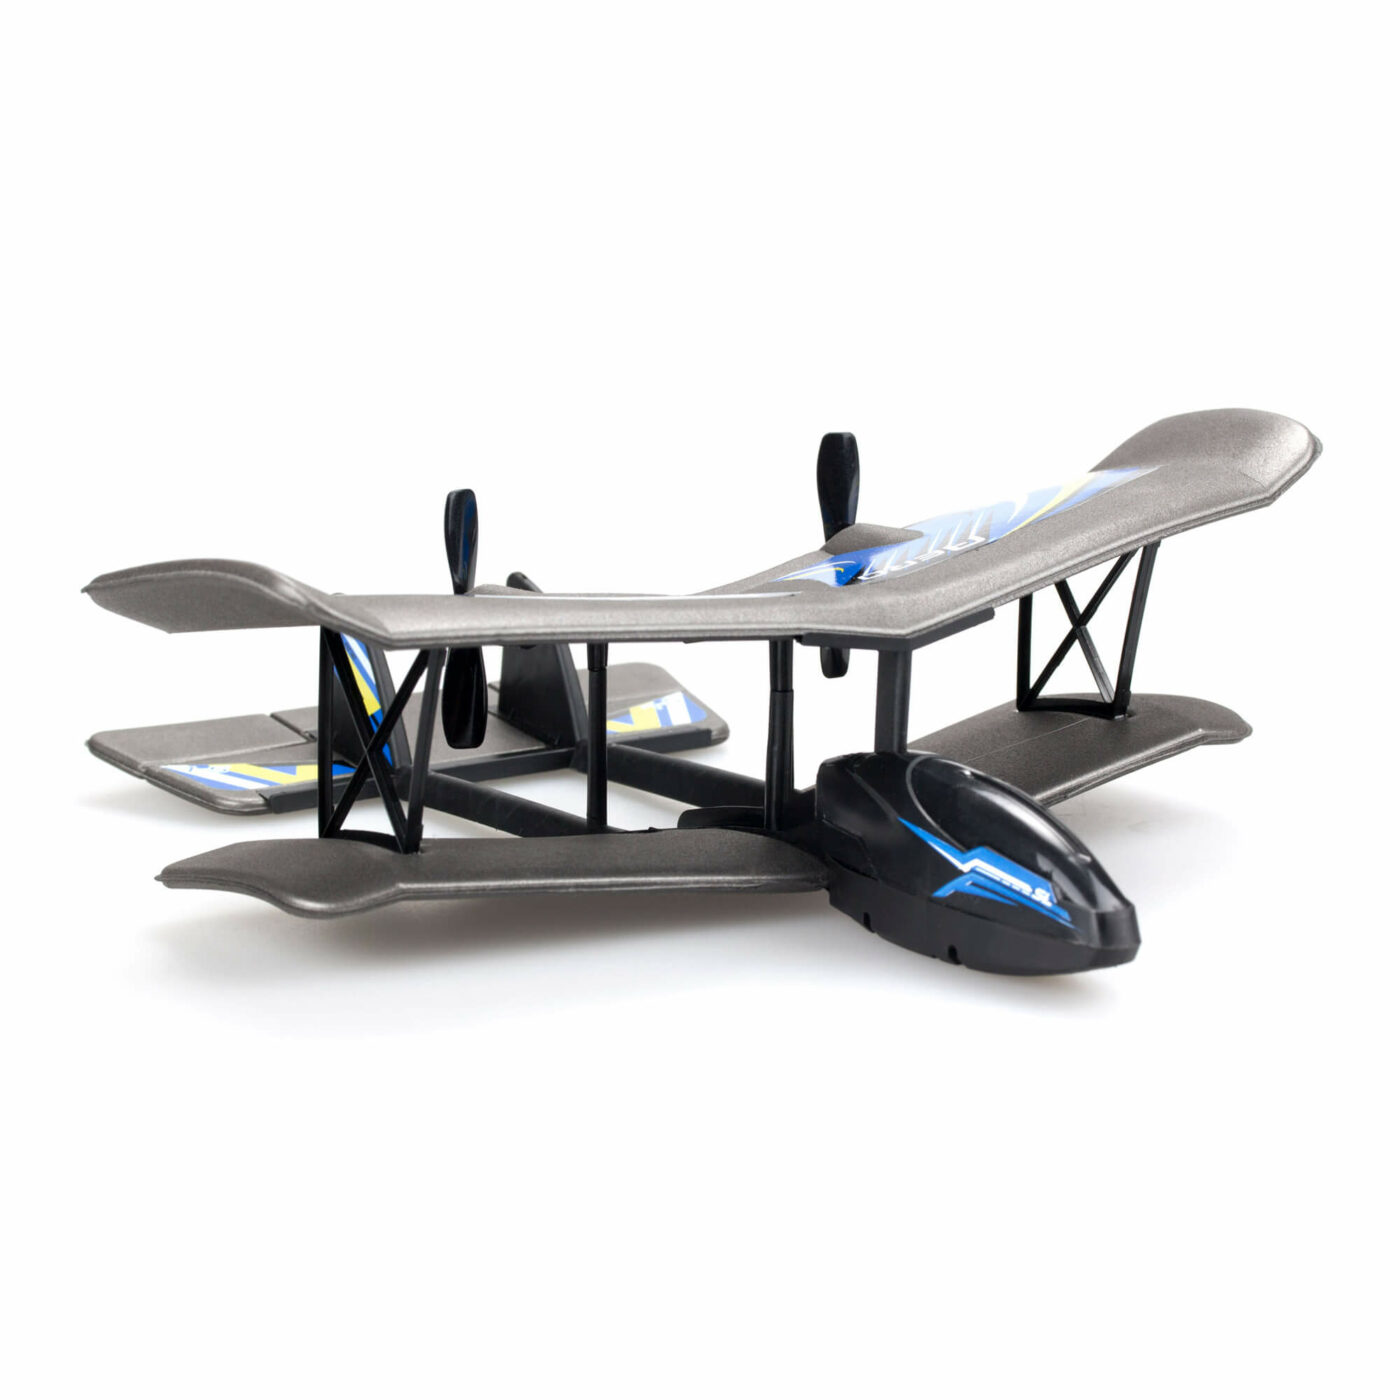 Silverlit - Flybotic Bi-Wing Evo - RC Plane